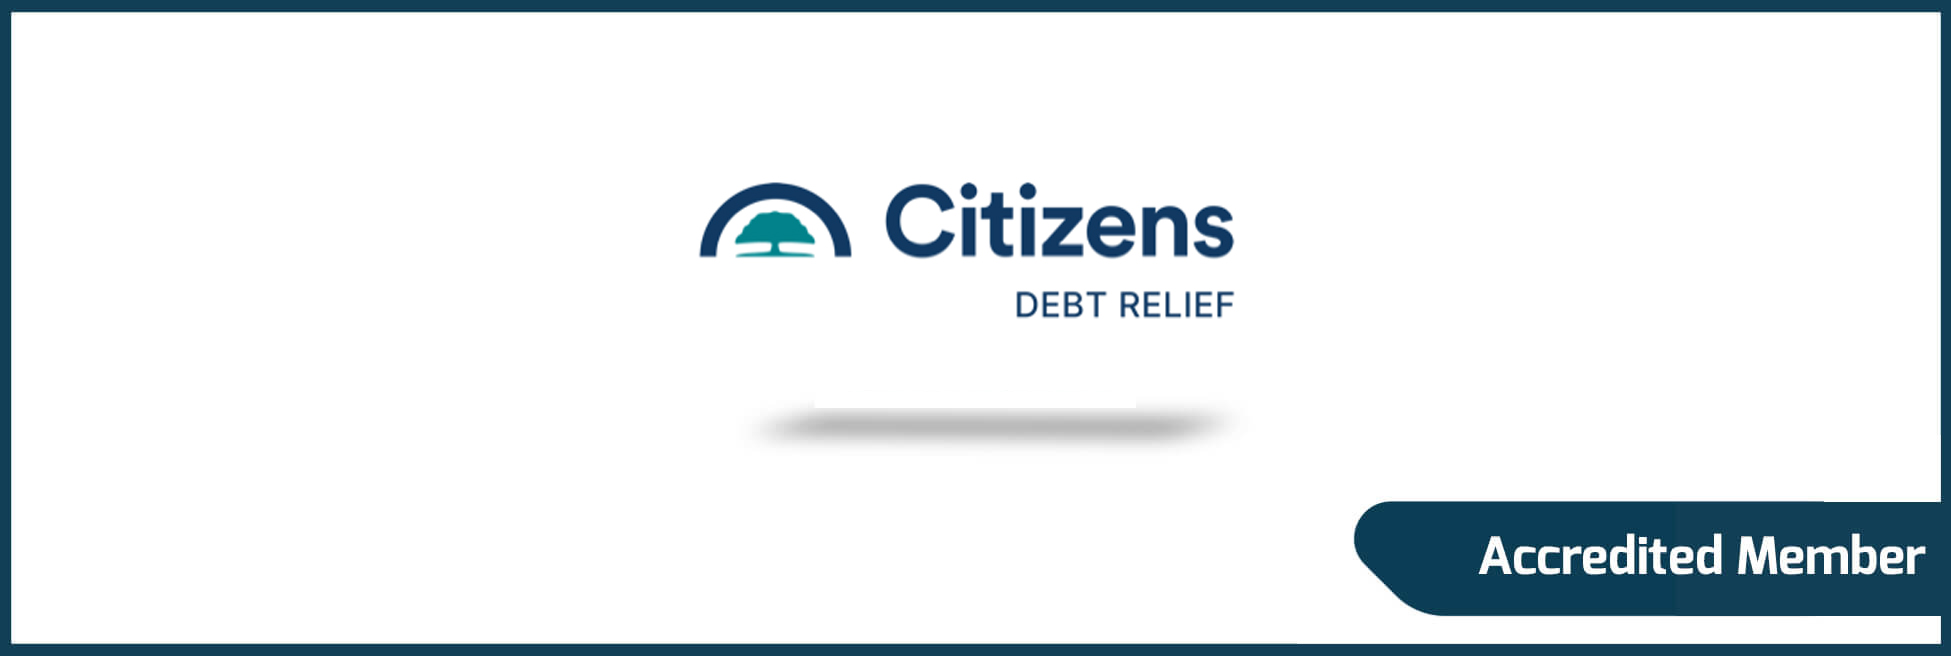 Citizens Debt Relief, LLC